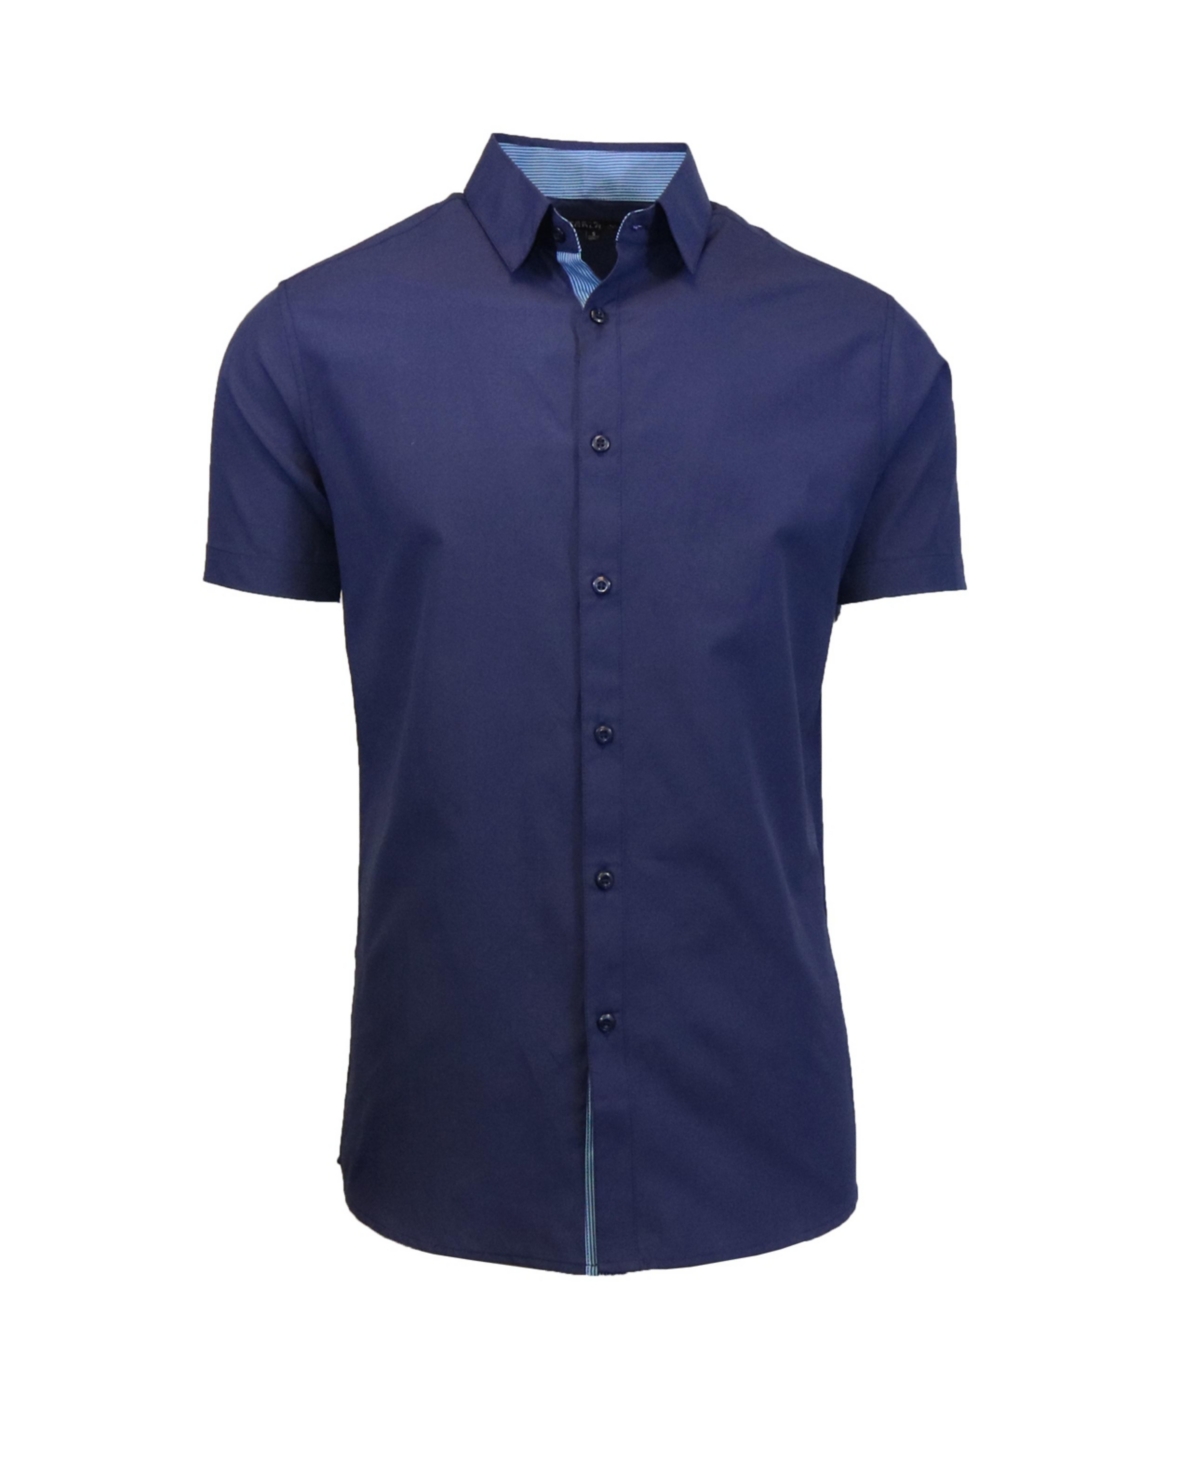 Men's Slim-Fit Short Sleeve Solid Dress Shirts - Mint